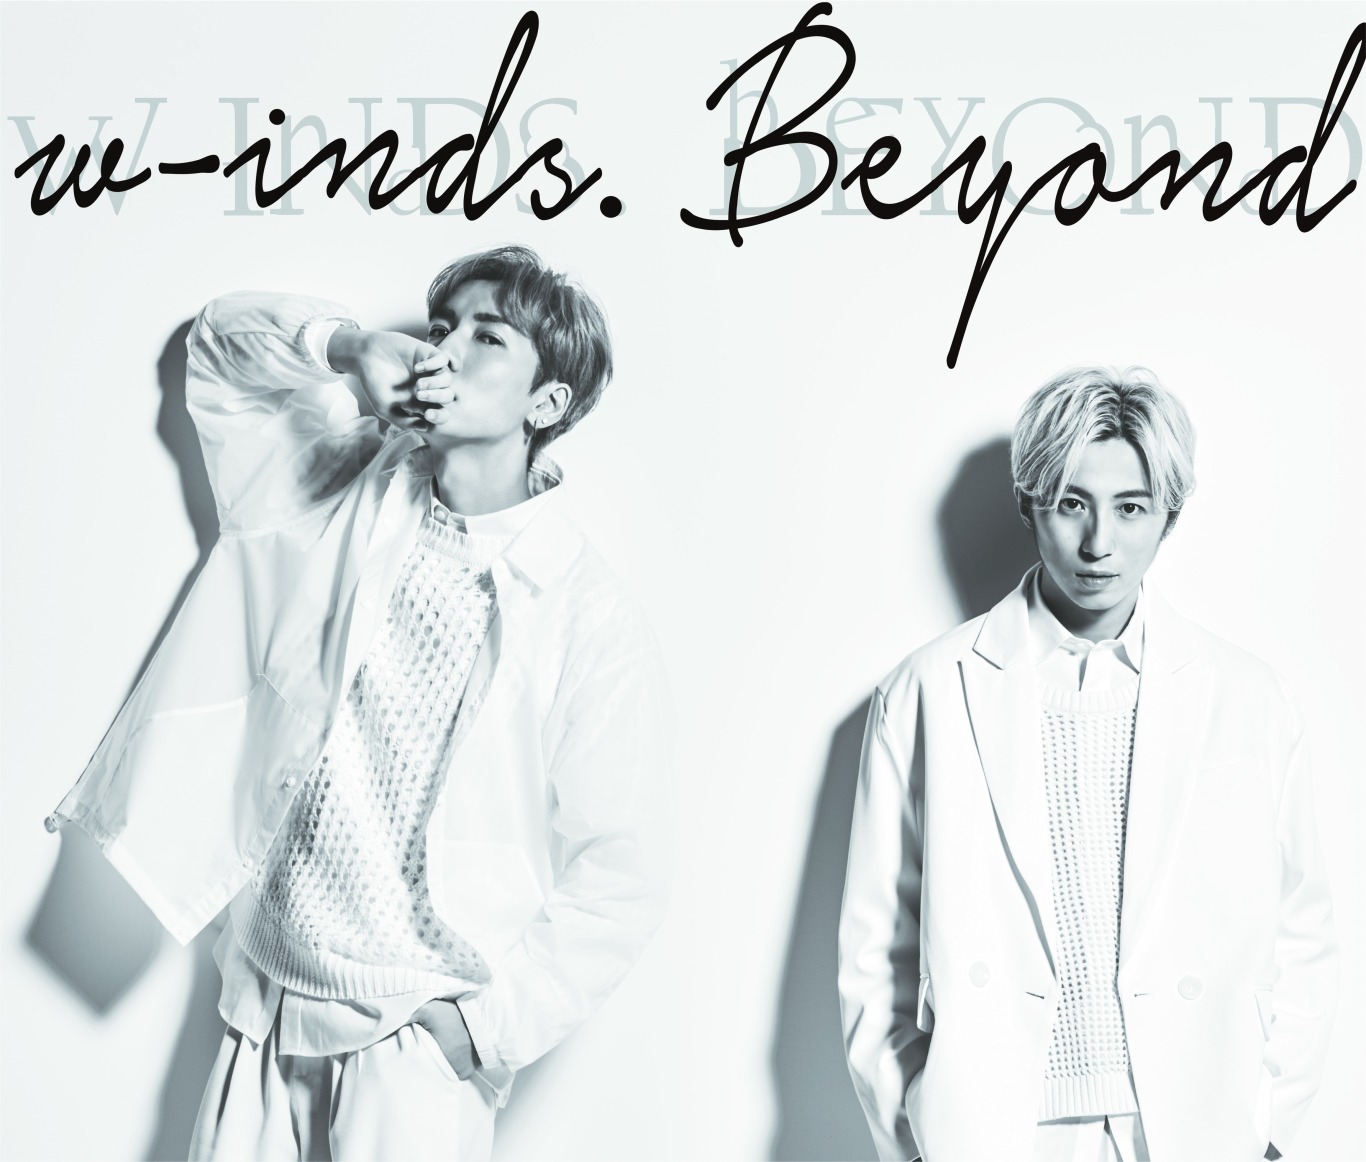 『Beyond』初回限定盤 [CD+Blu-ray]ジャケット